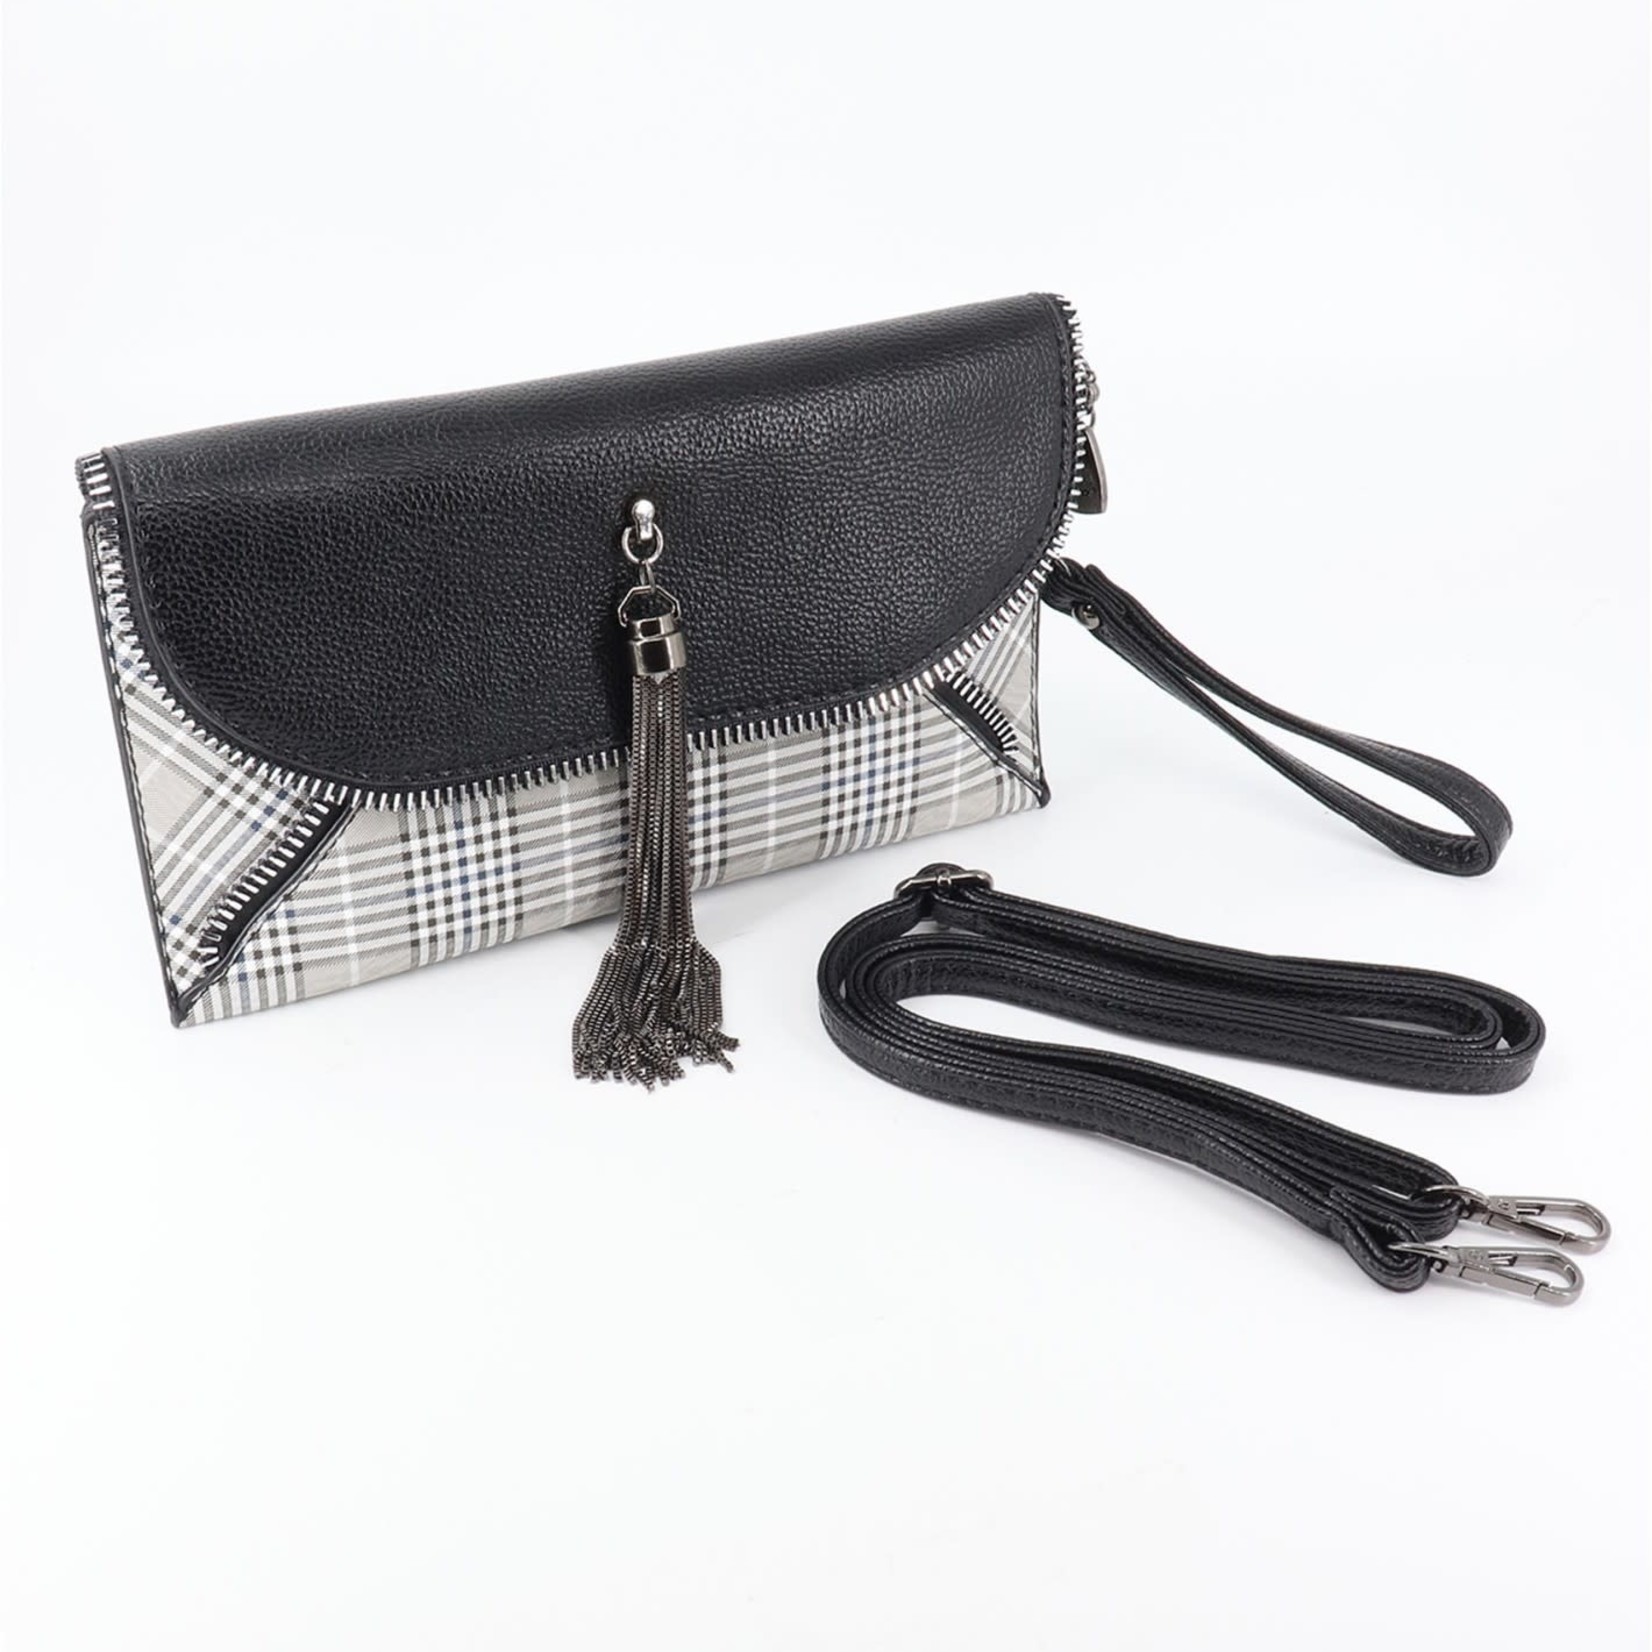 Purse/Handbag Black/Beige w/ Silver Zipper